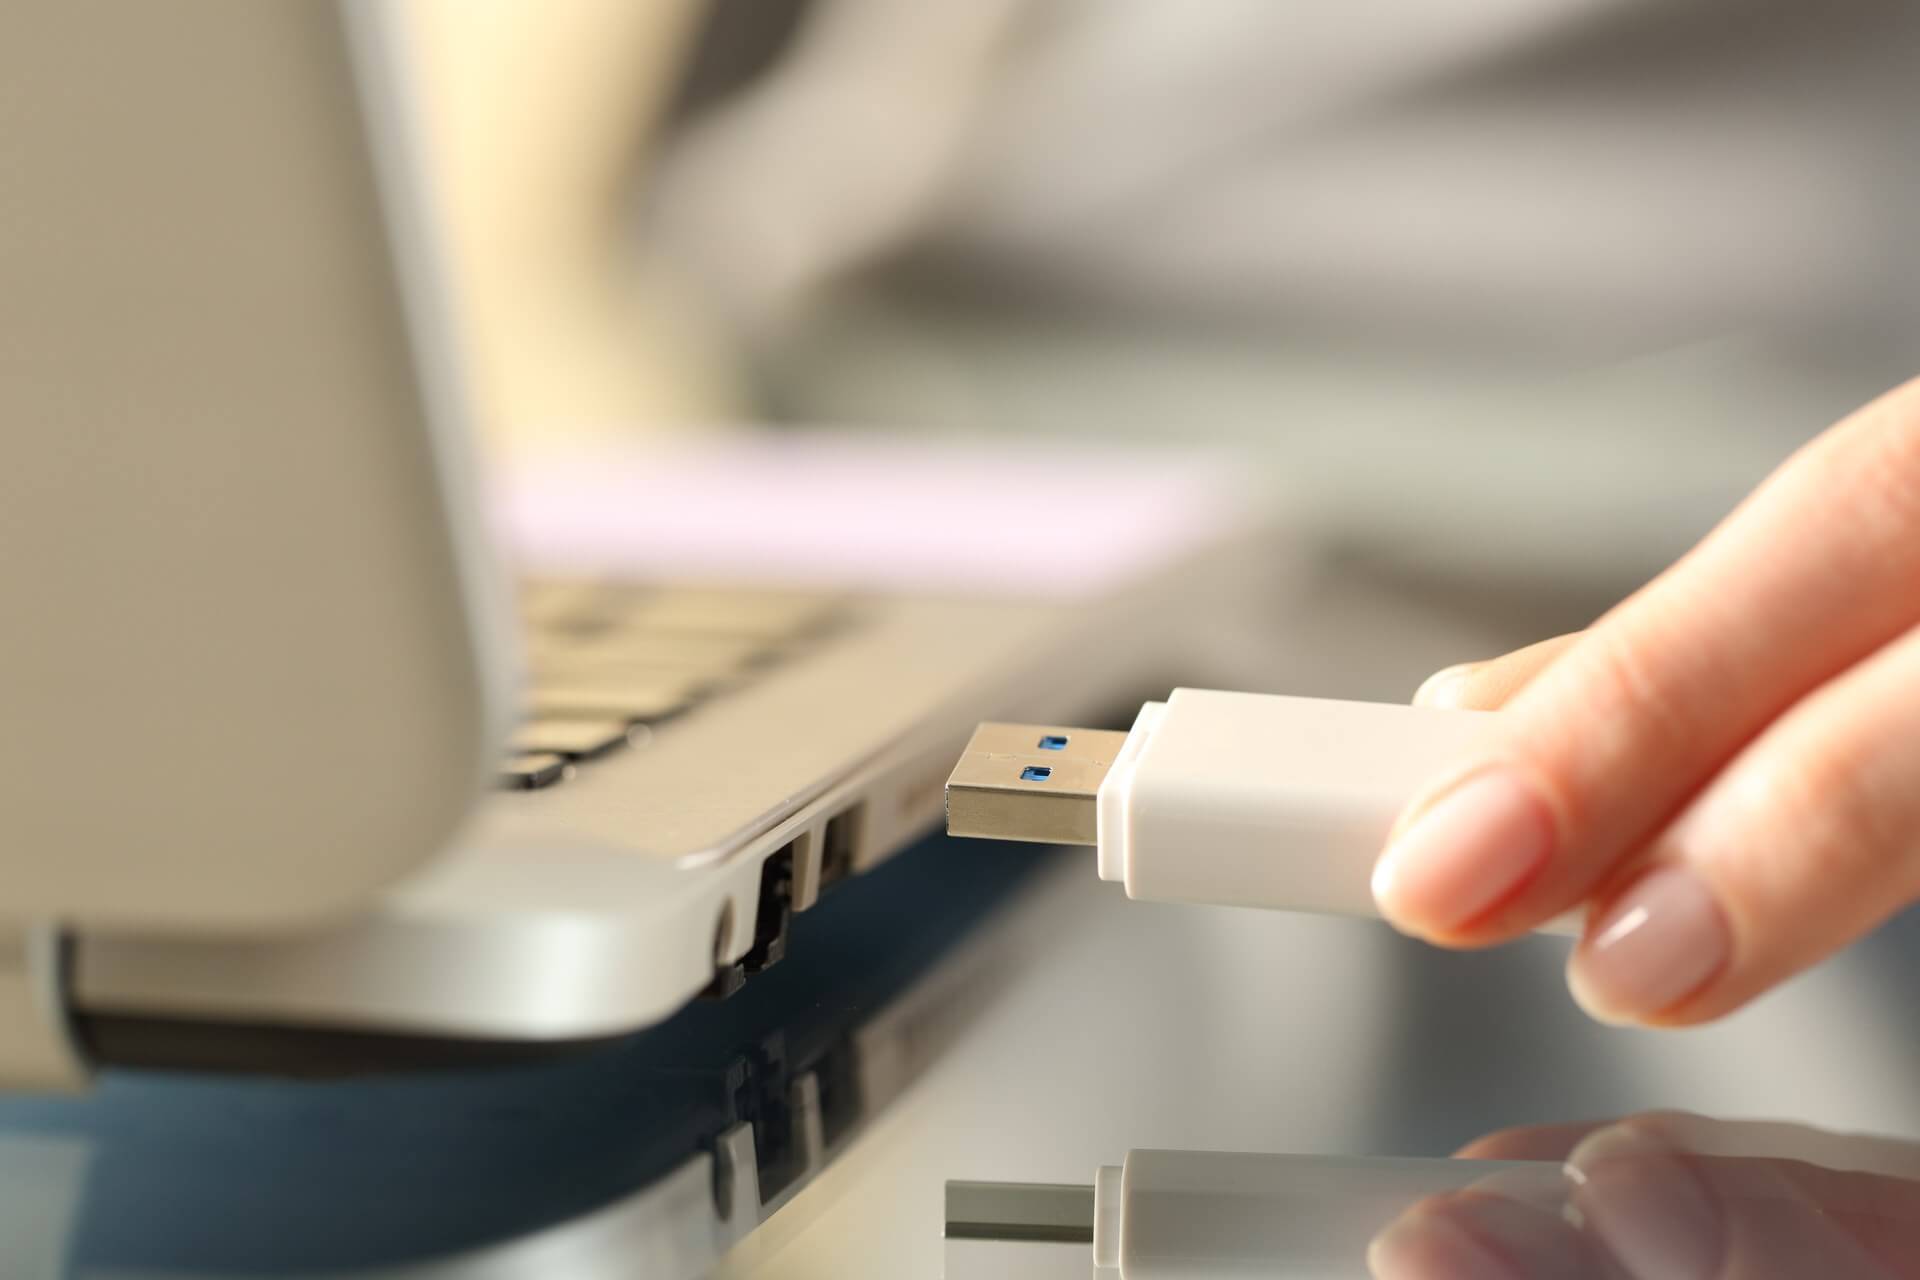 Computer shuts down USB device